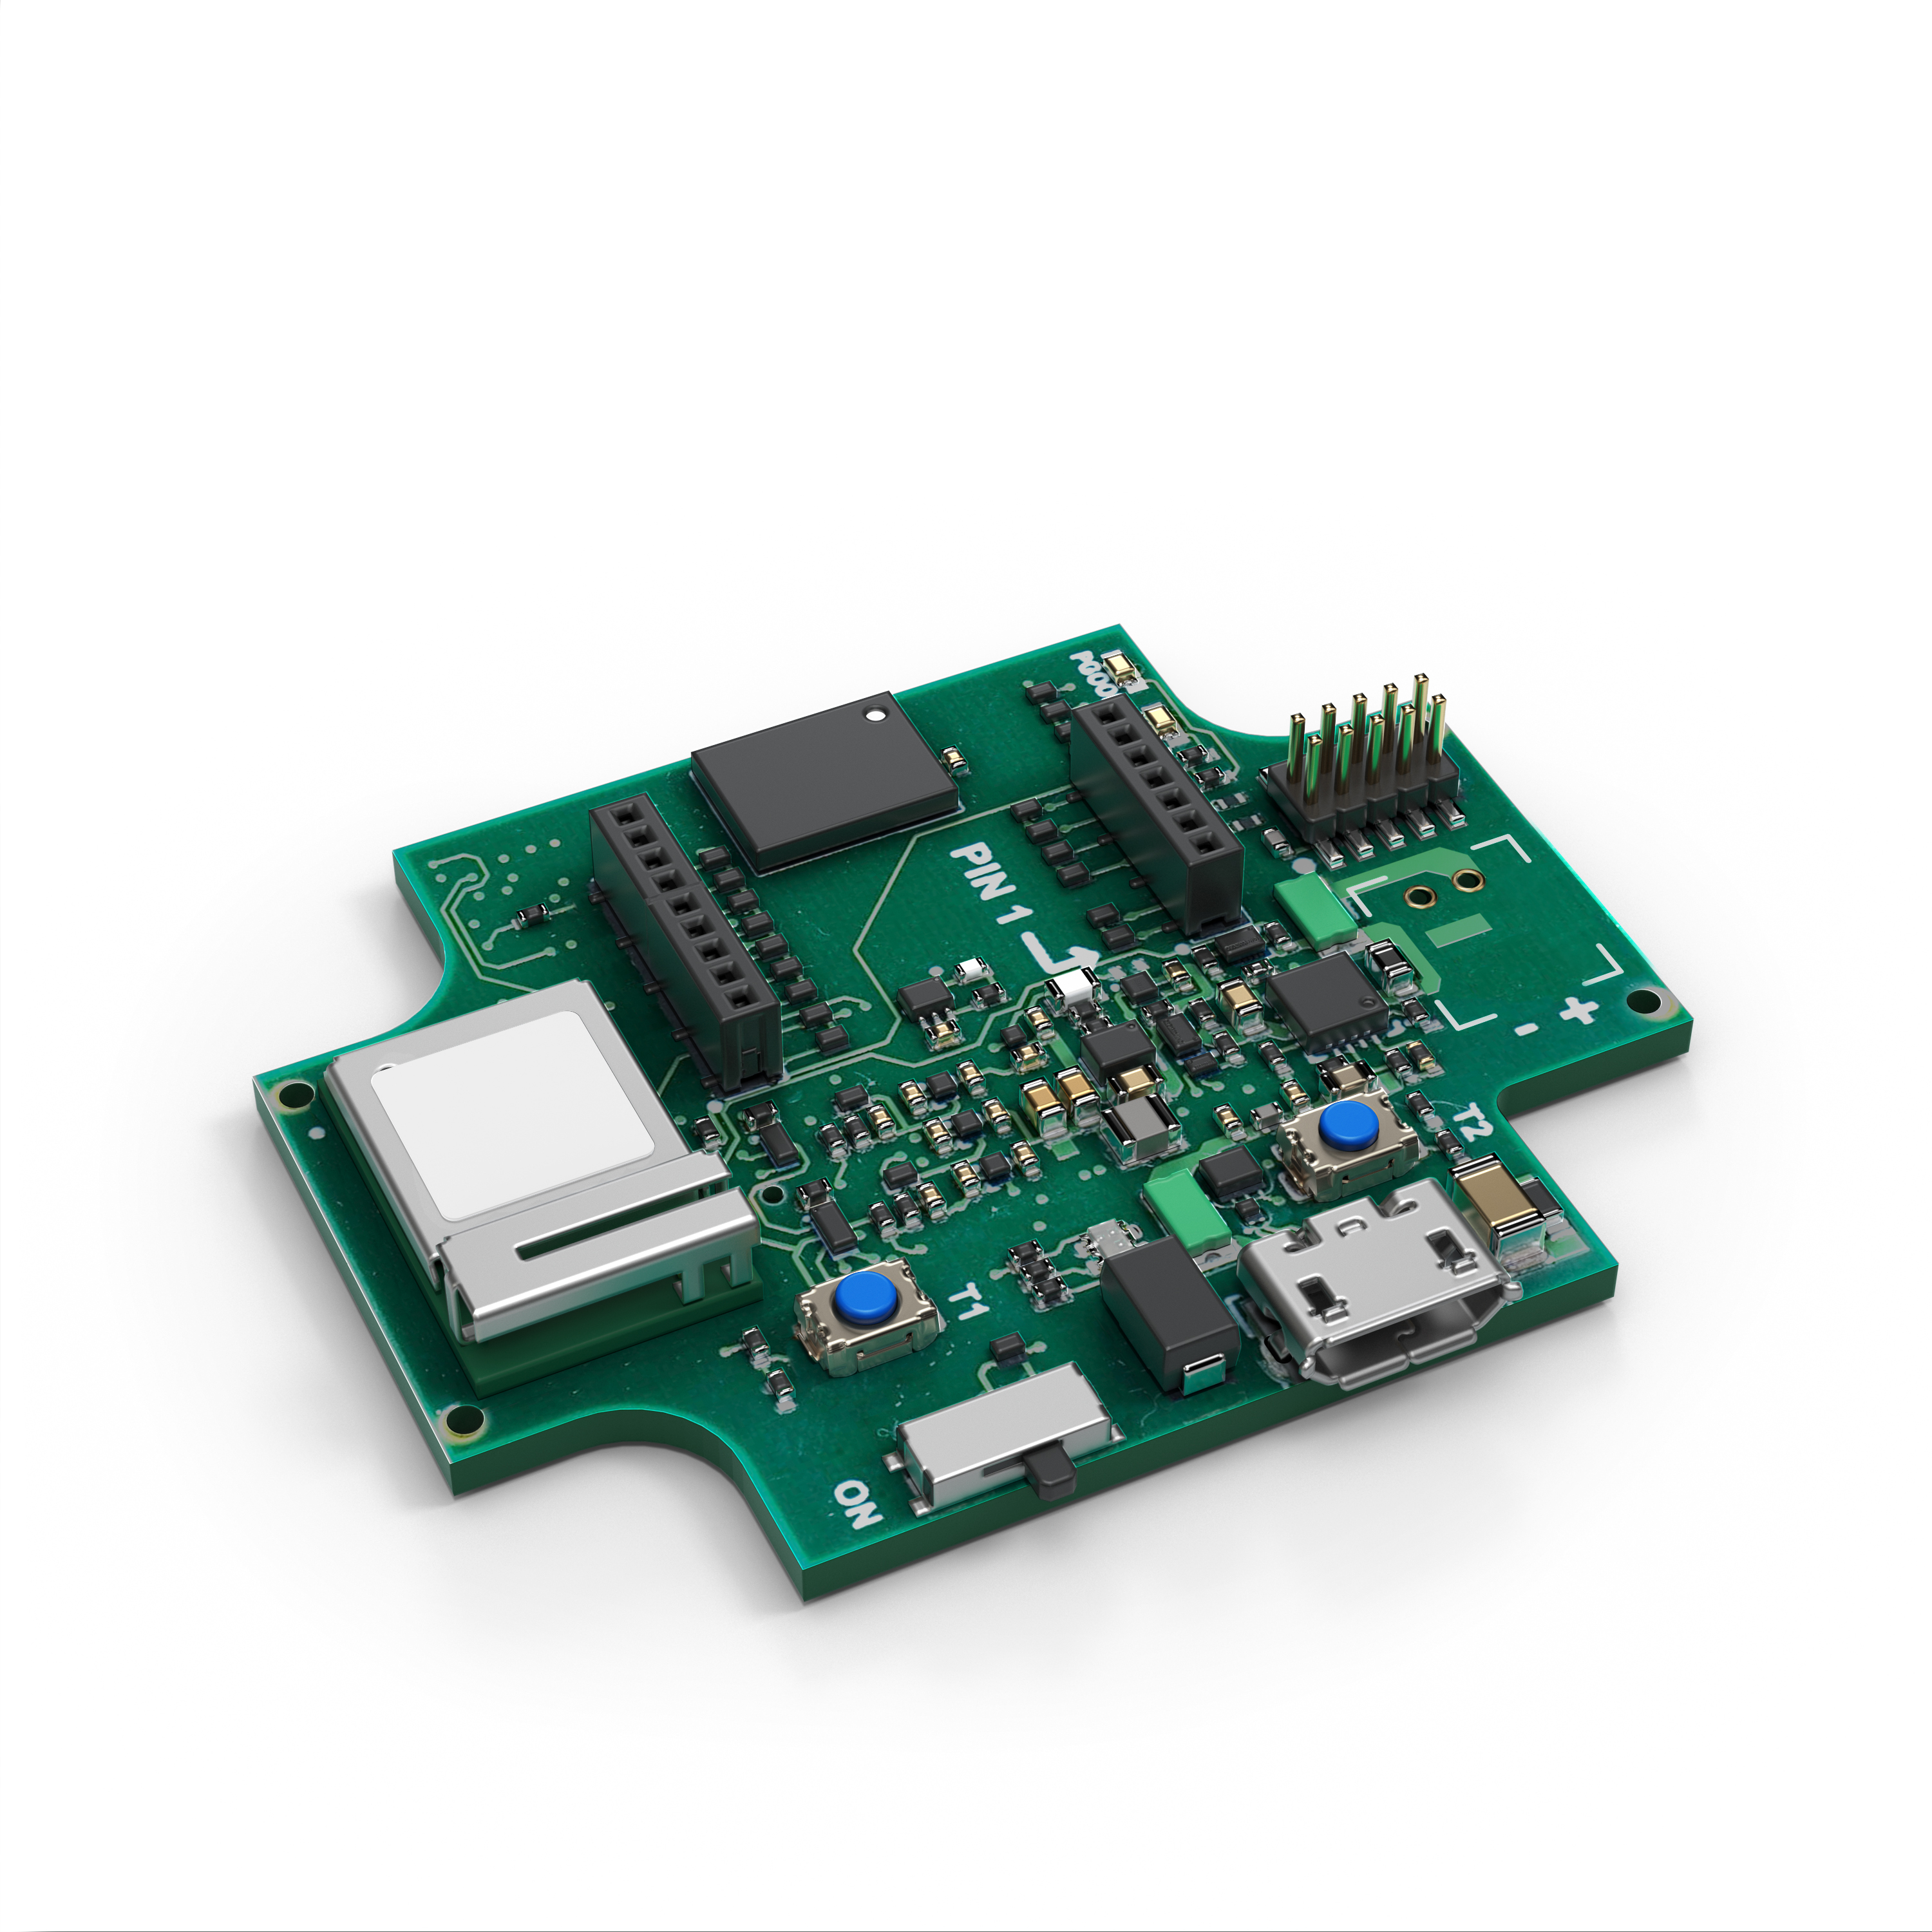 Sensor Eval Board for Rapid Prototyping Speeds Development